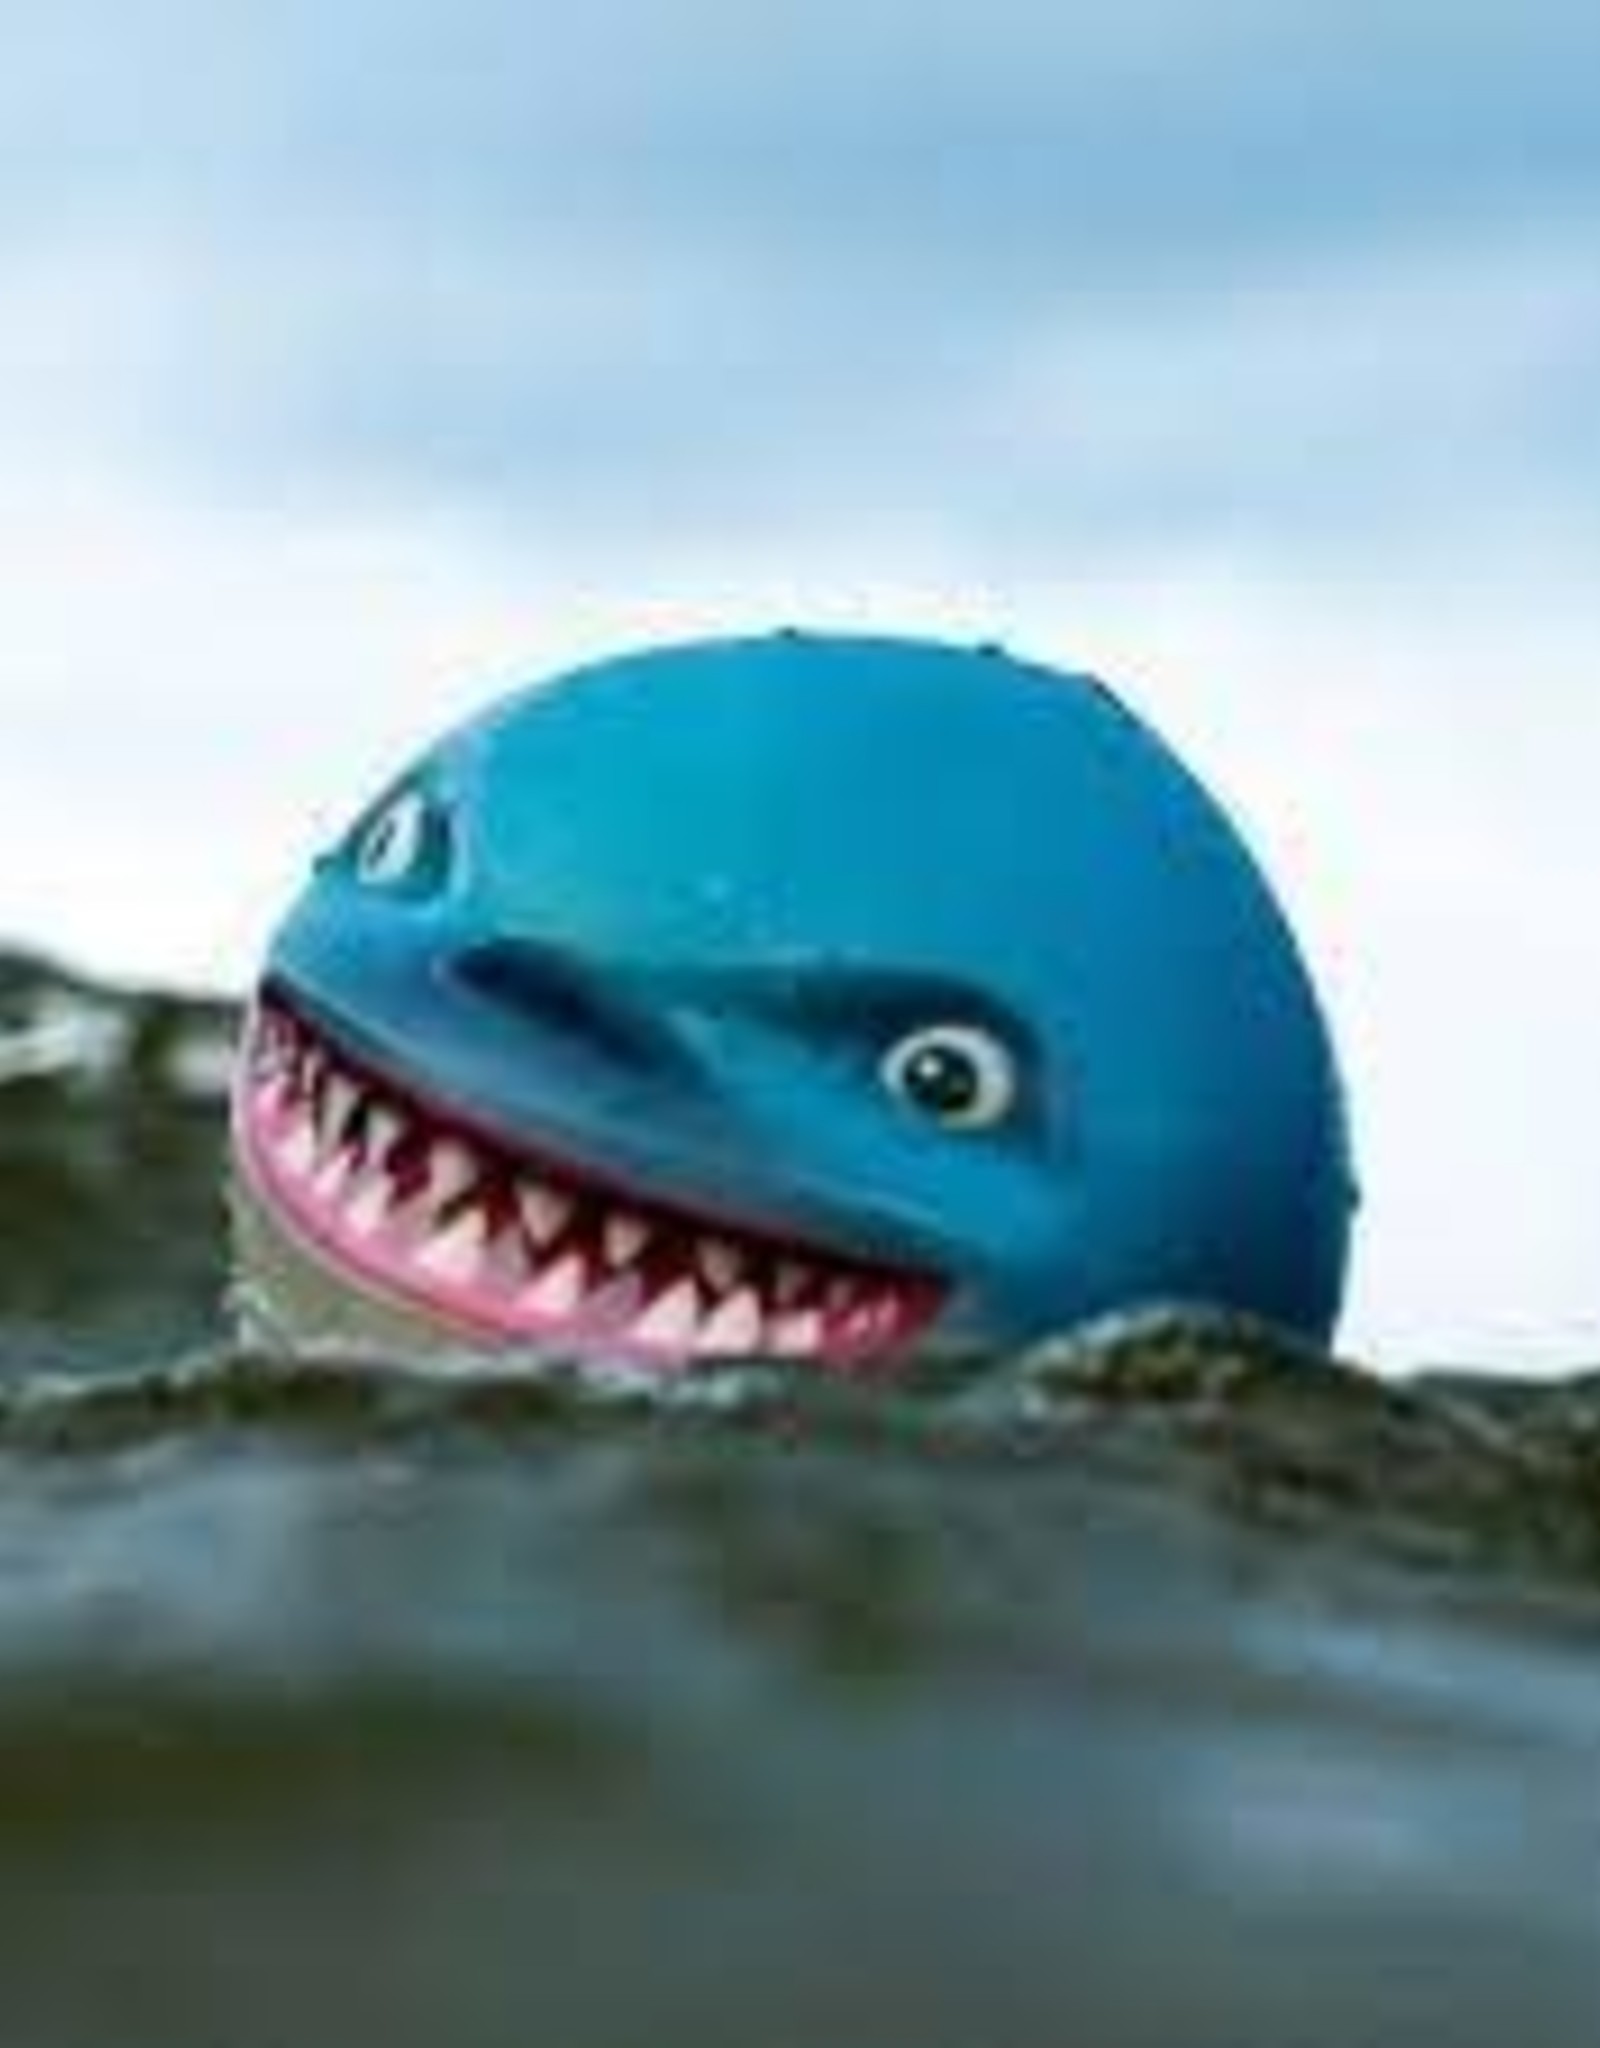 Sharky Shark Water Ball